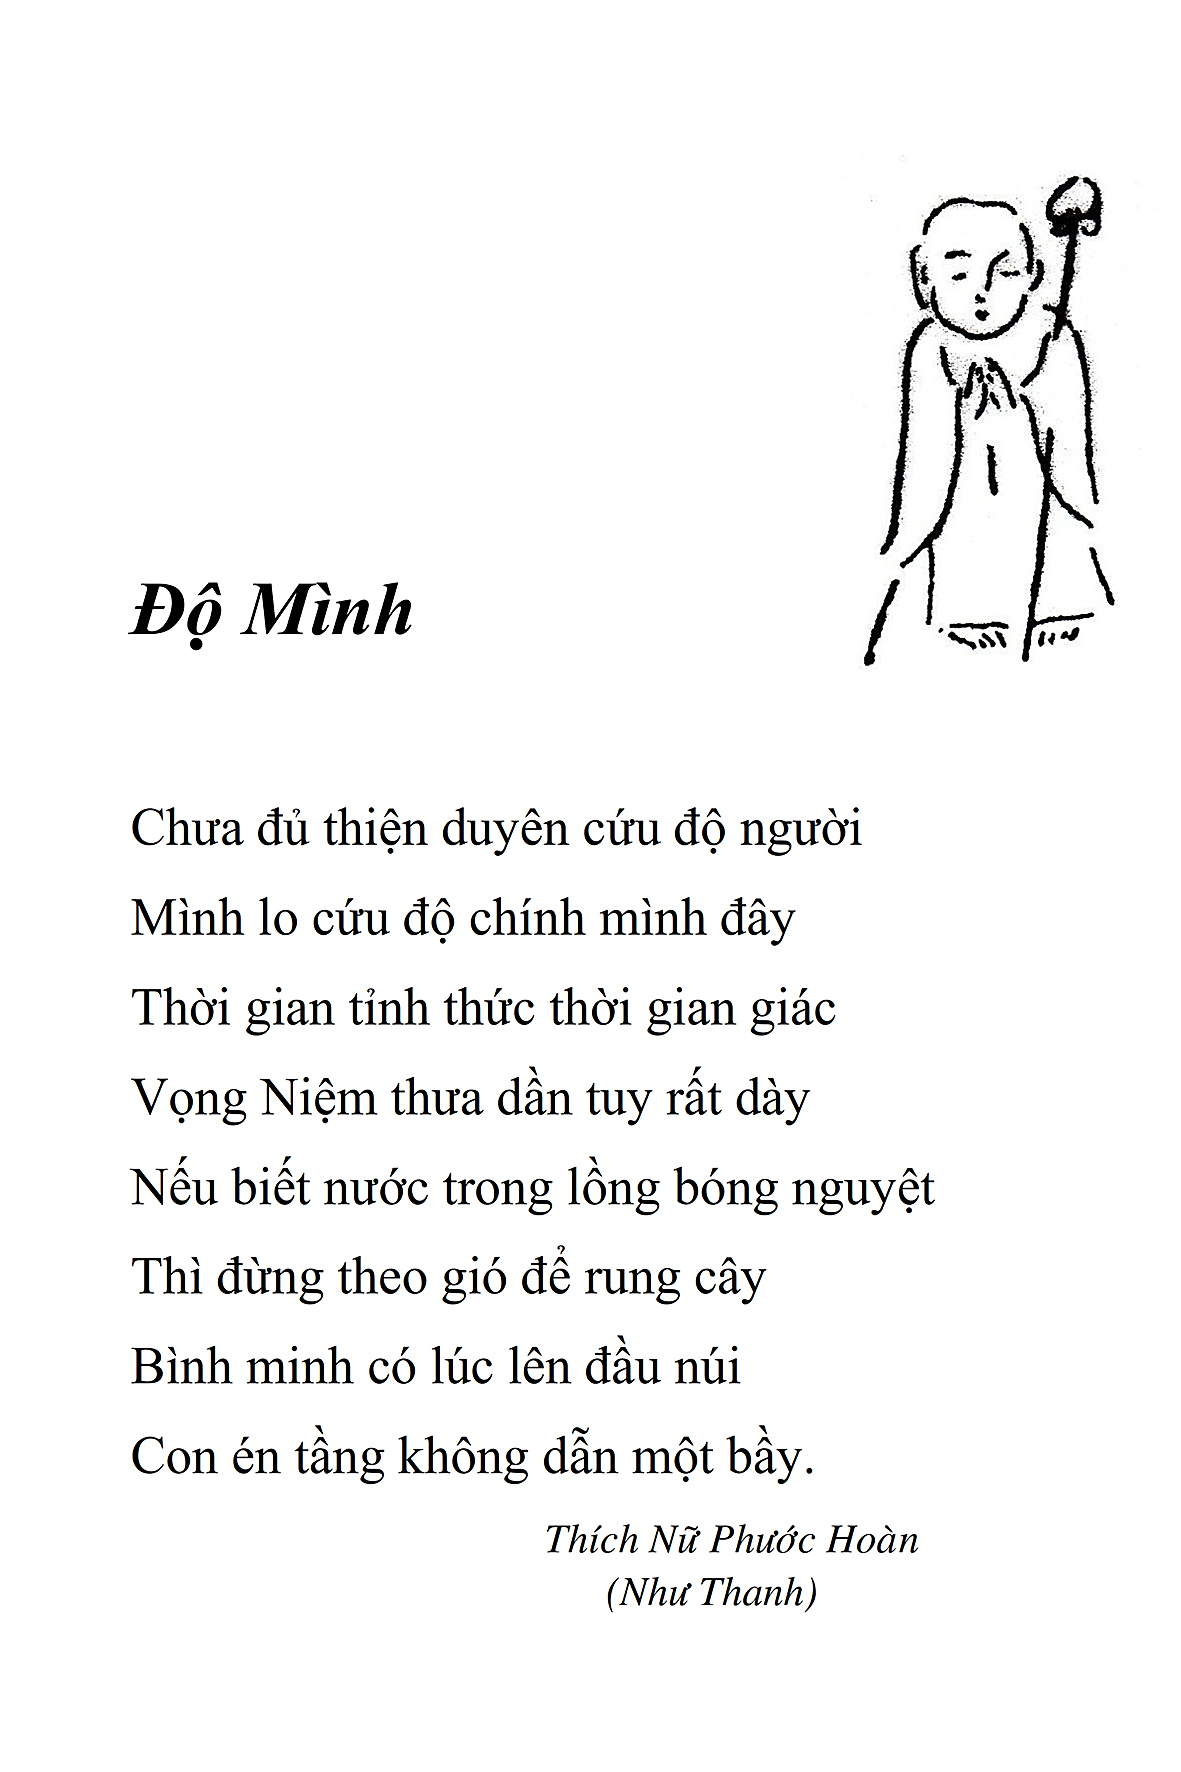 Do Minh